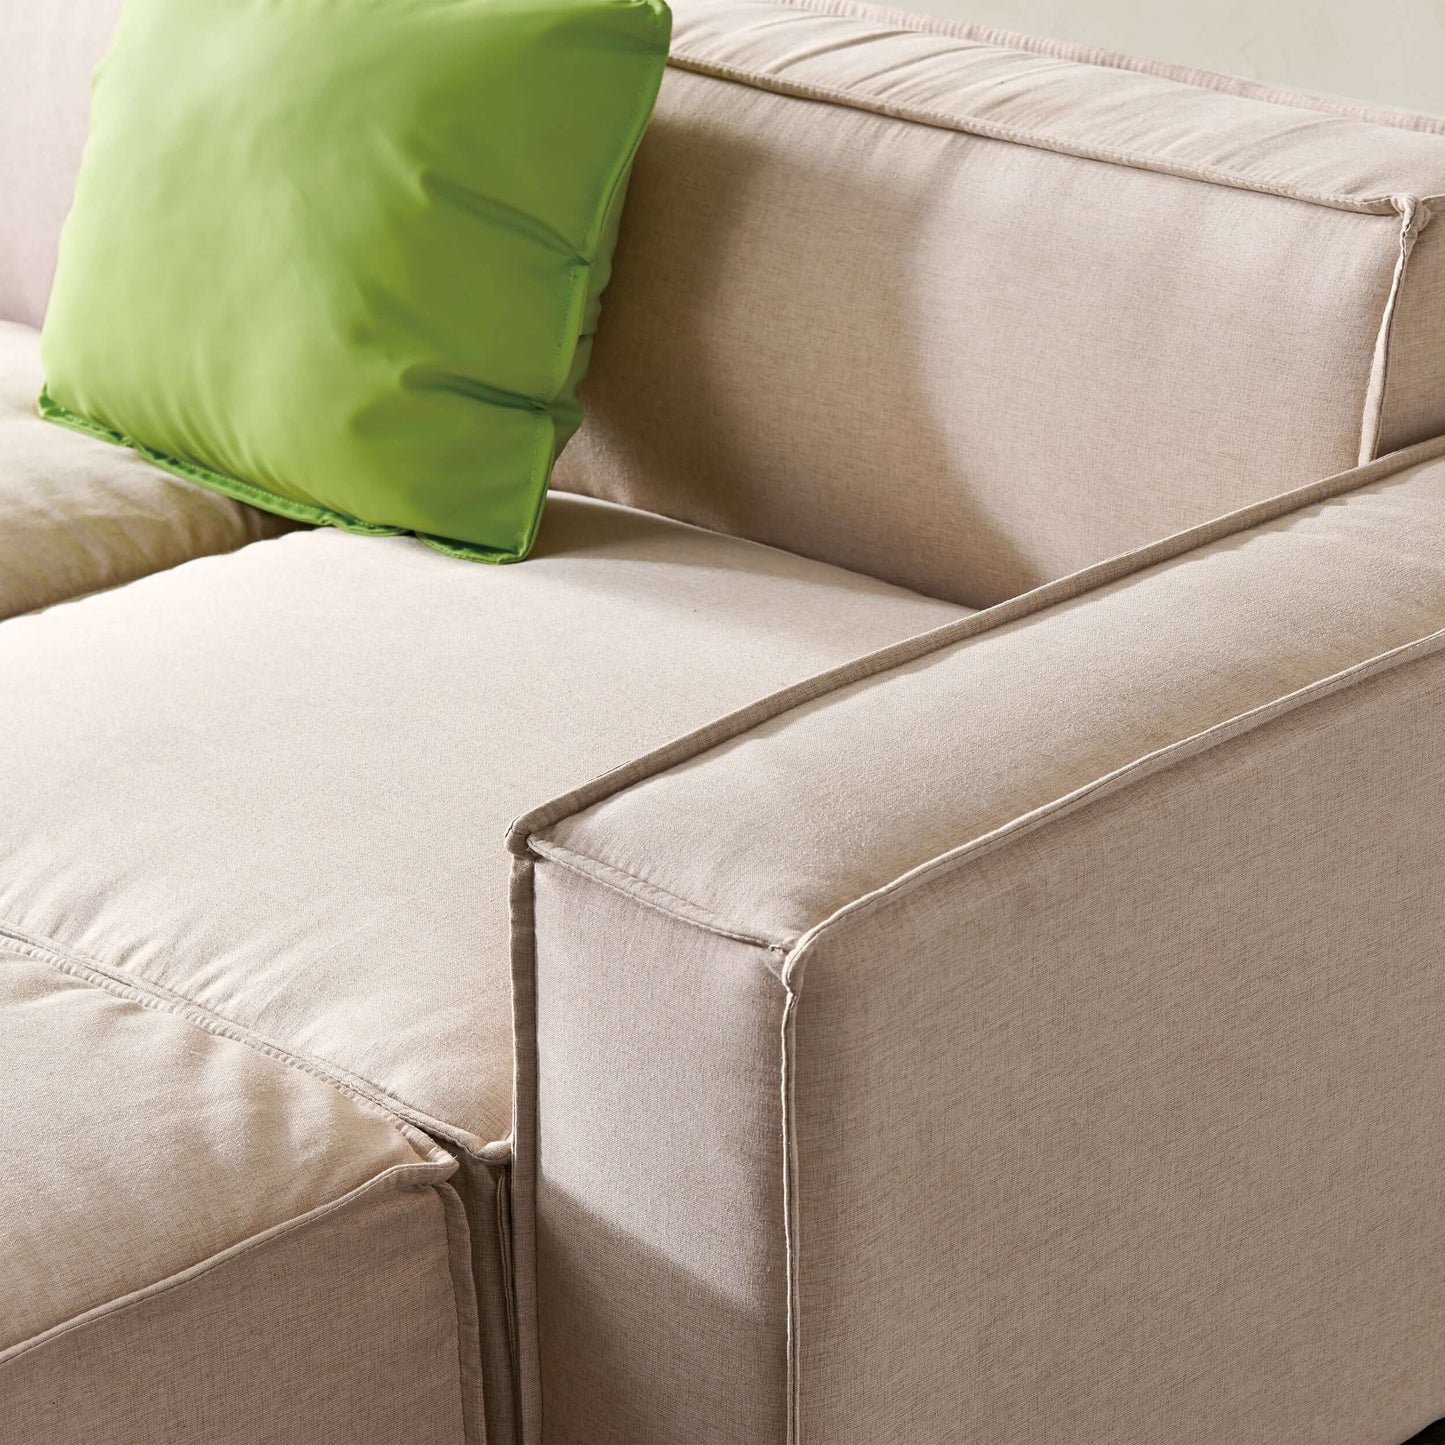 Modern Minimalist Modular U Shape Dual Chaise Sectional Fabric Sofa, Beige or Gray 131" - Revel Sofa 